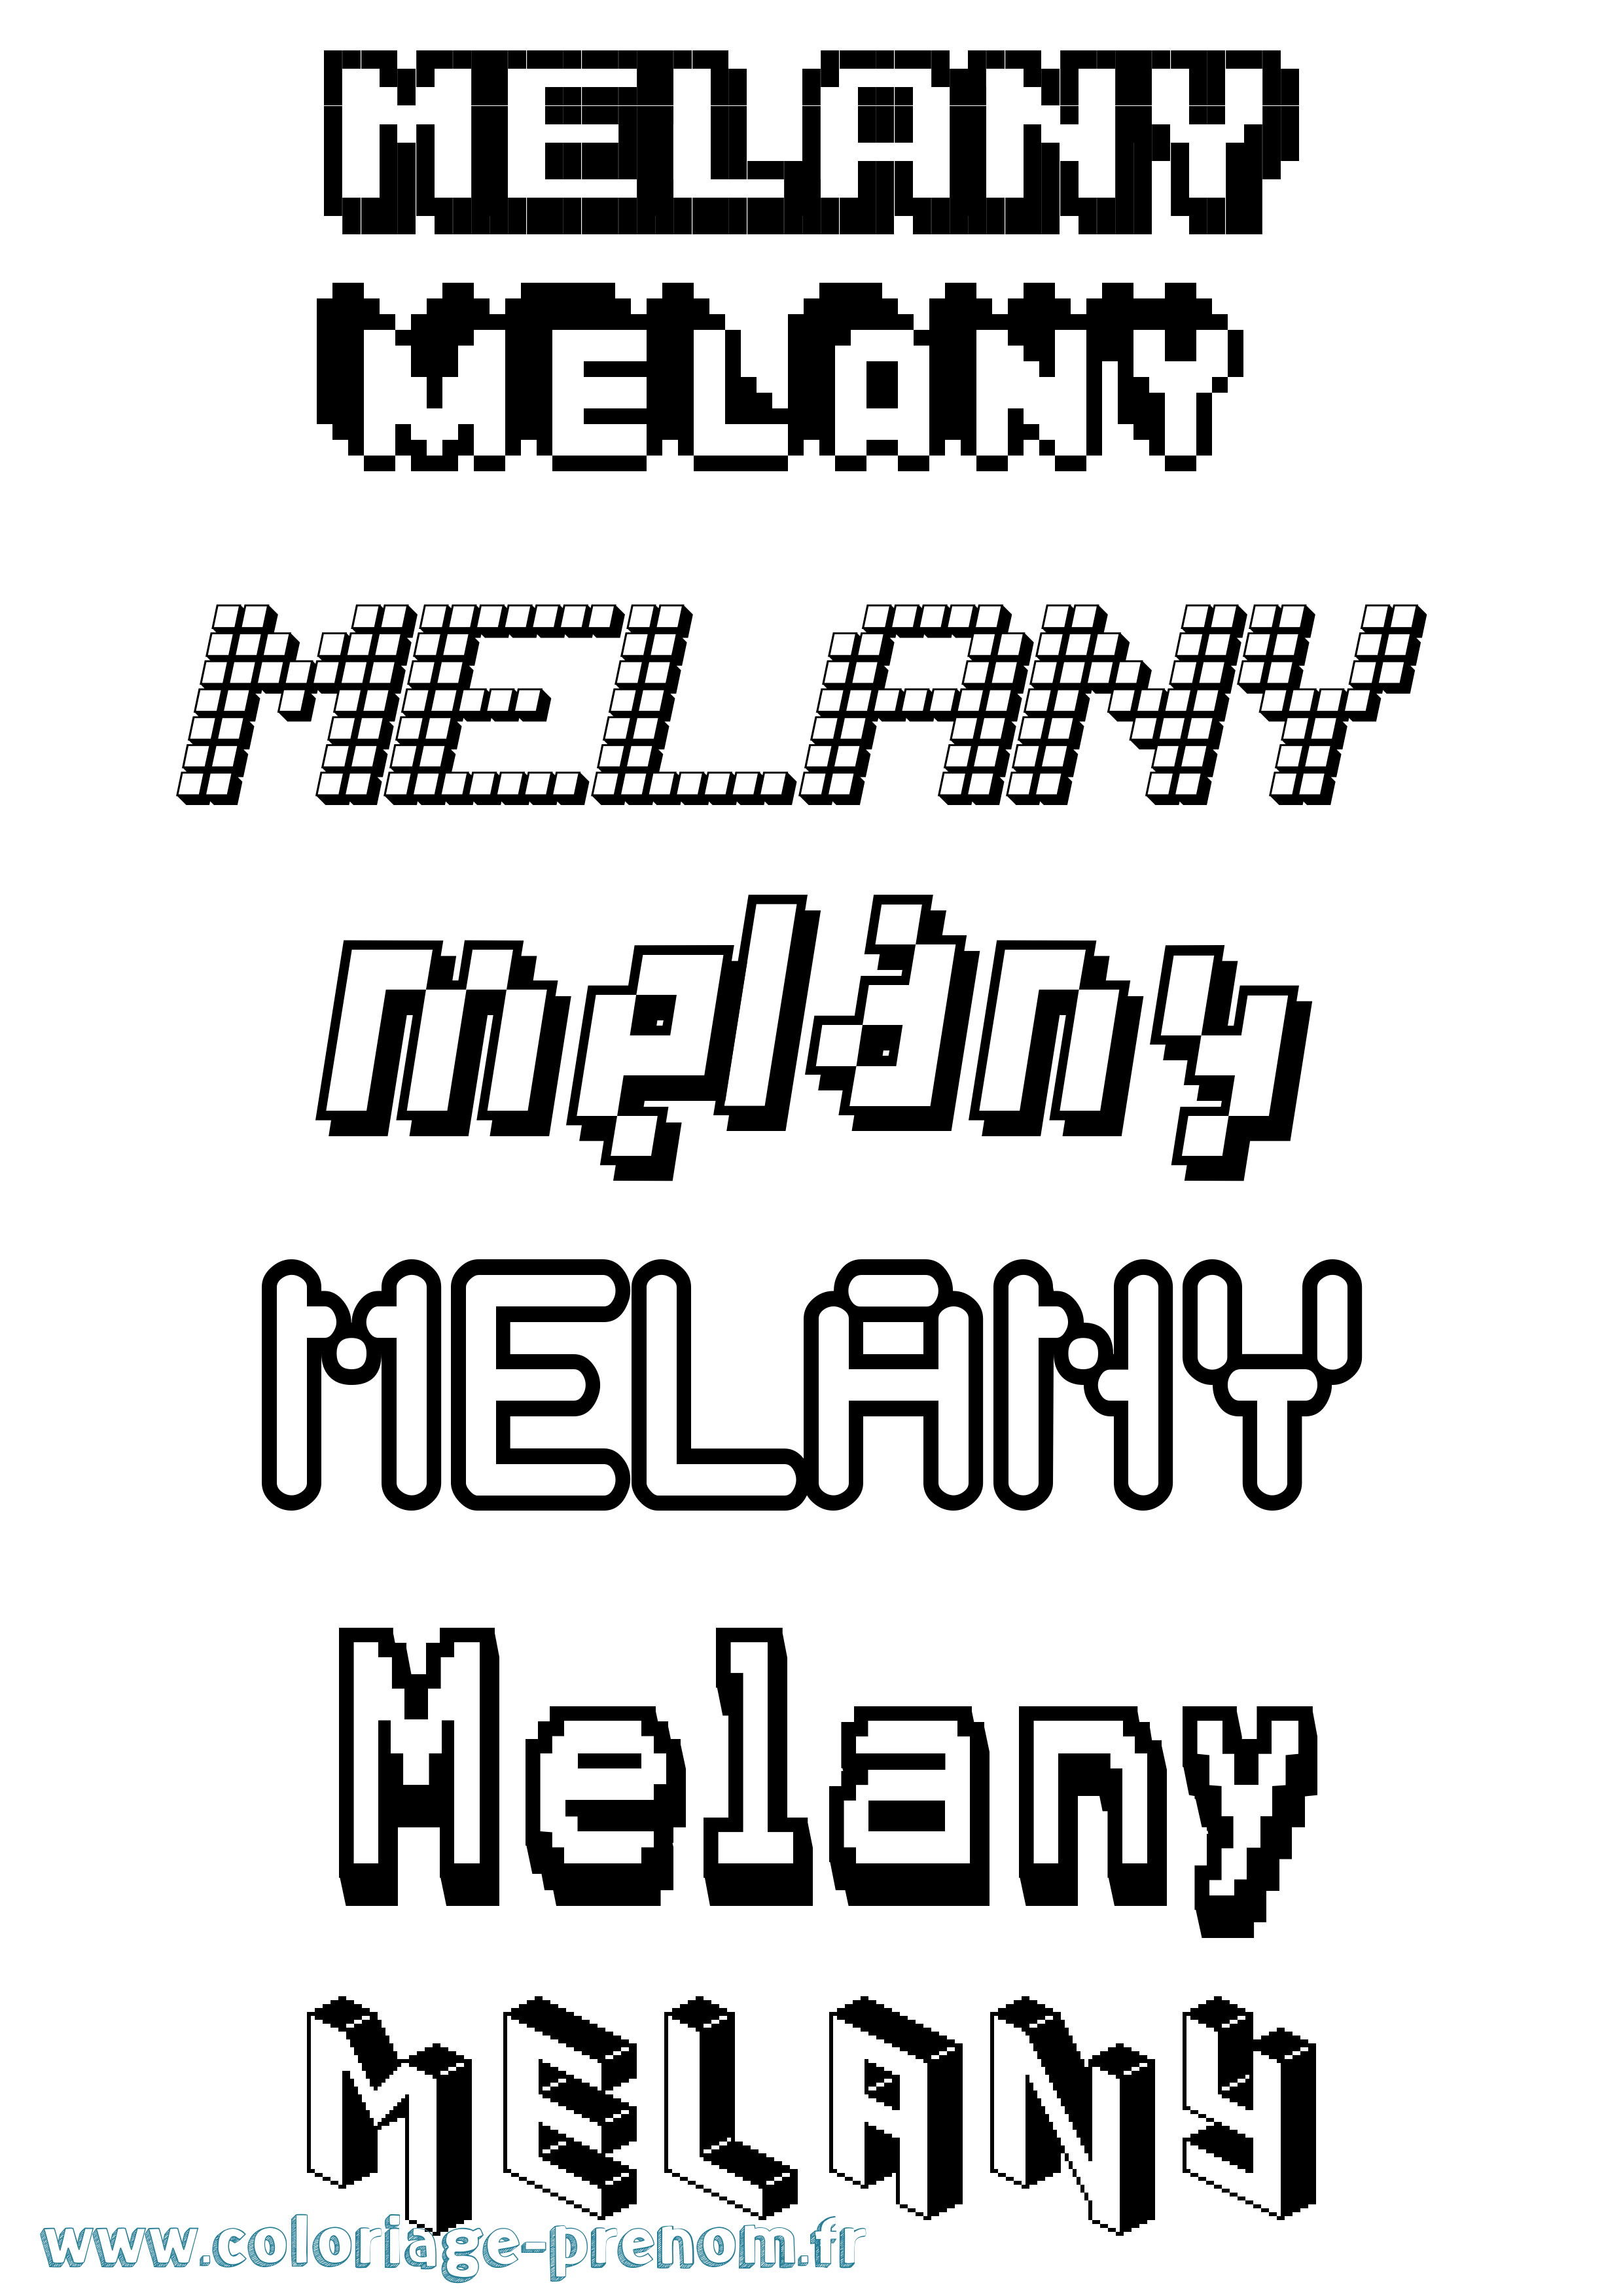 Coloriage prénom Melany Pixel